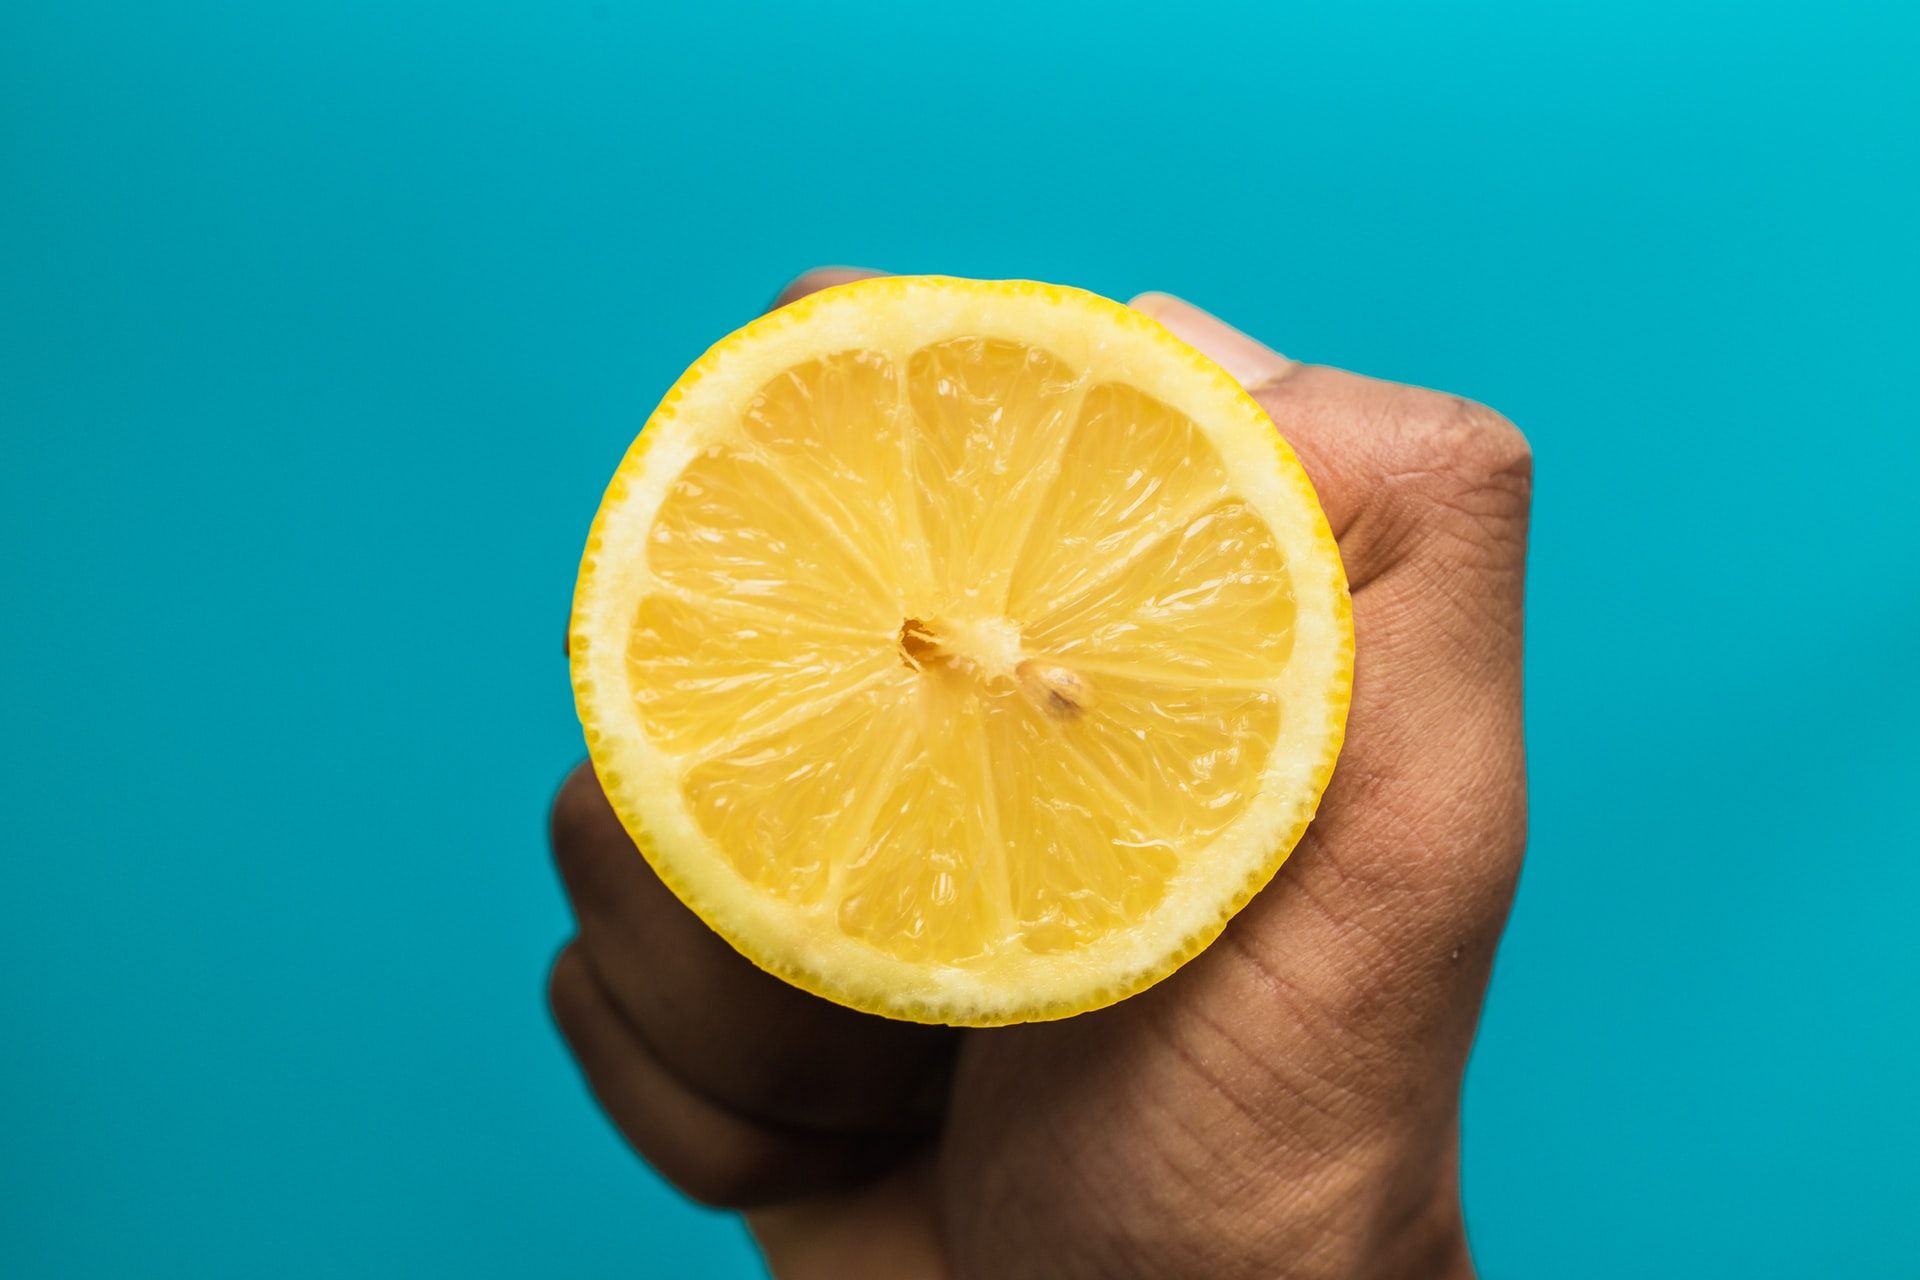 Holding a lemon